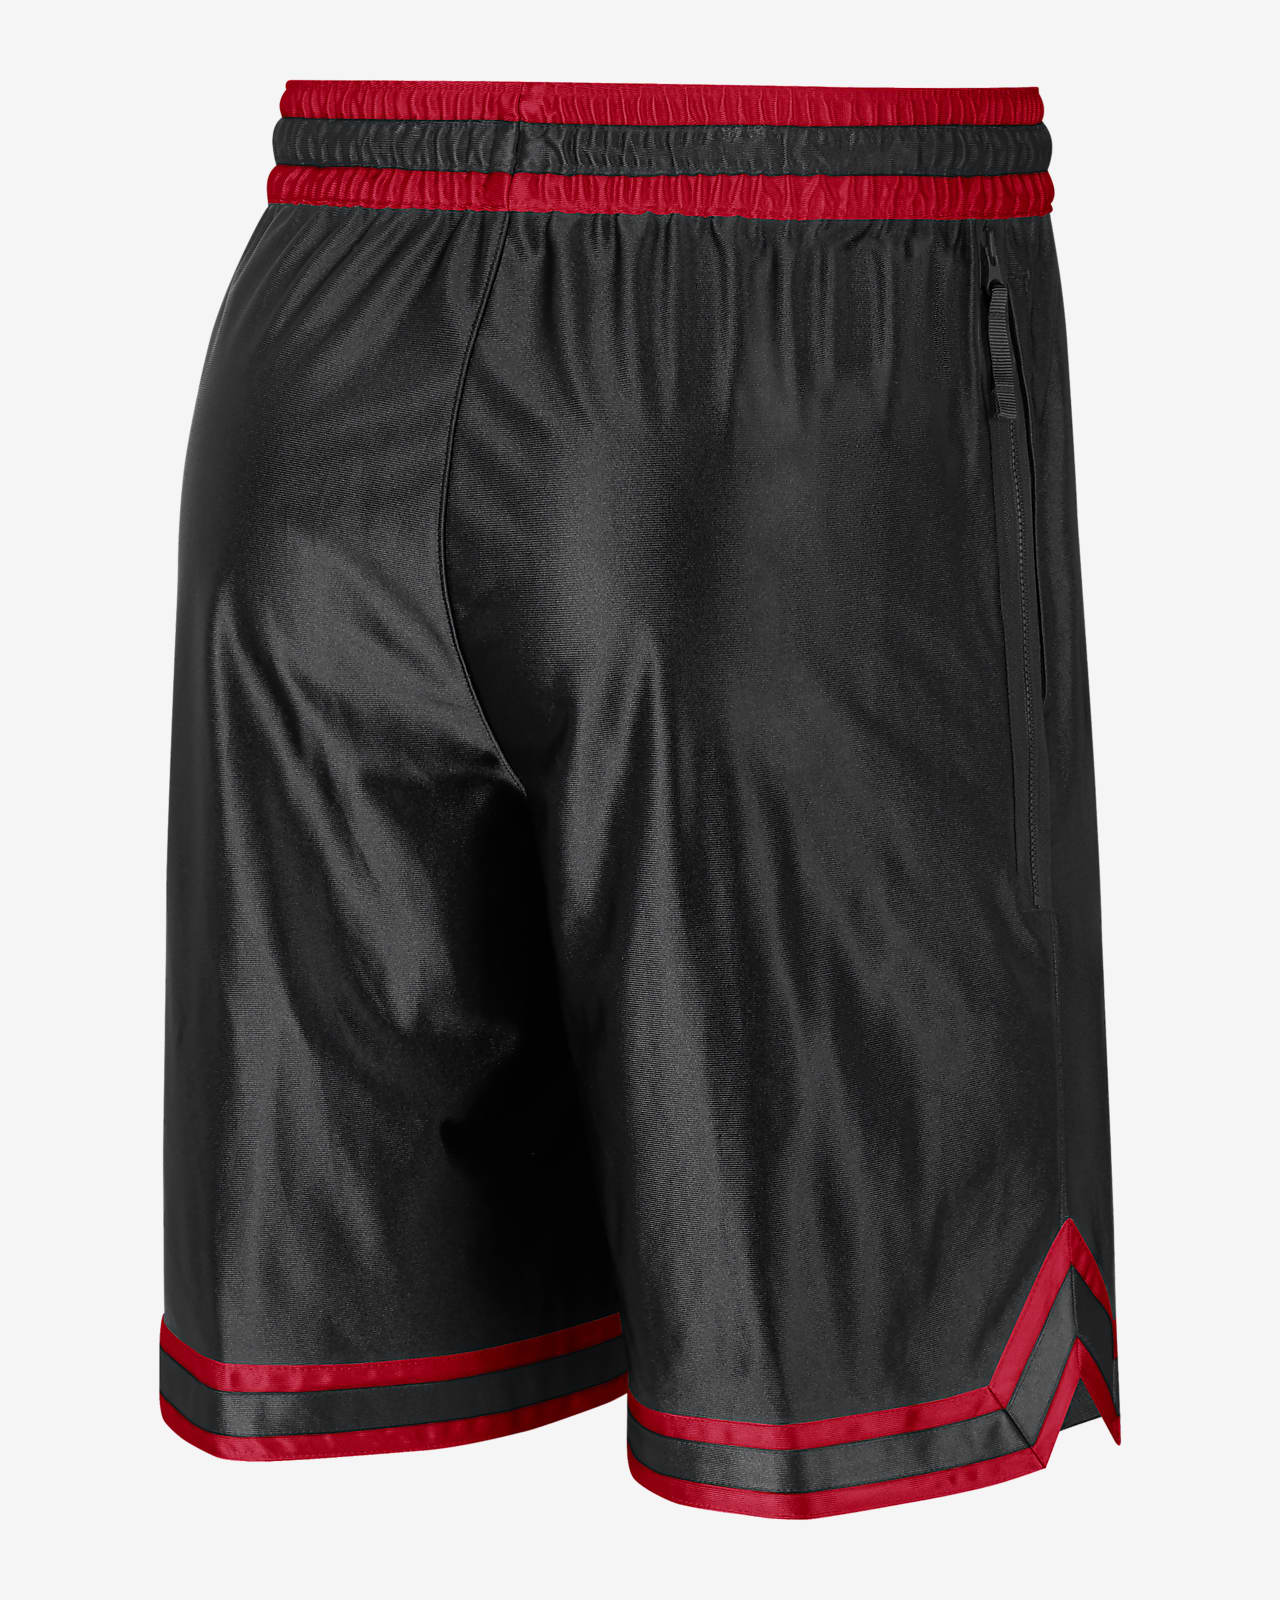 Chicago Bulls Courtside Men's Nike Dri-FIT NBA Shorts.